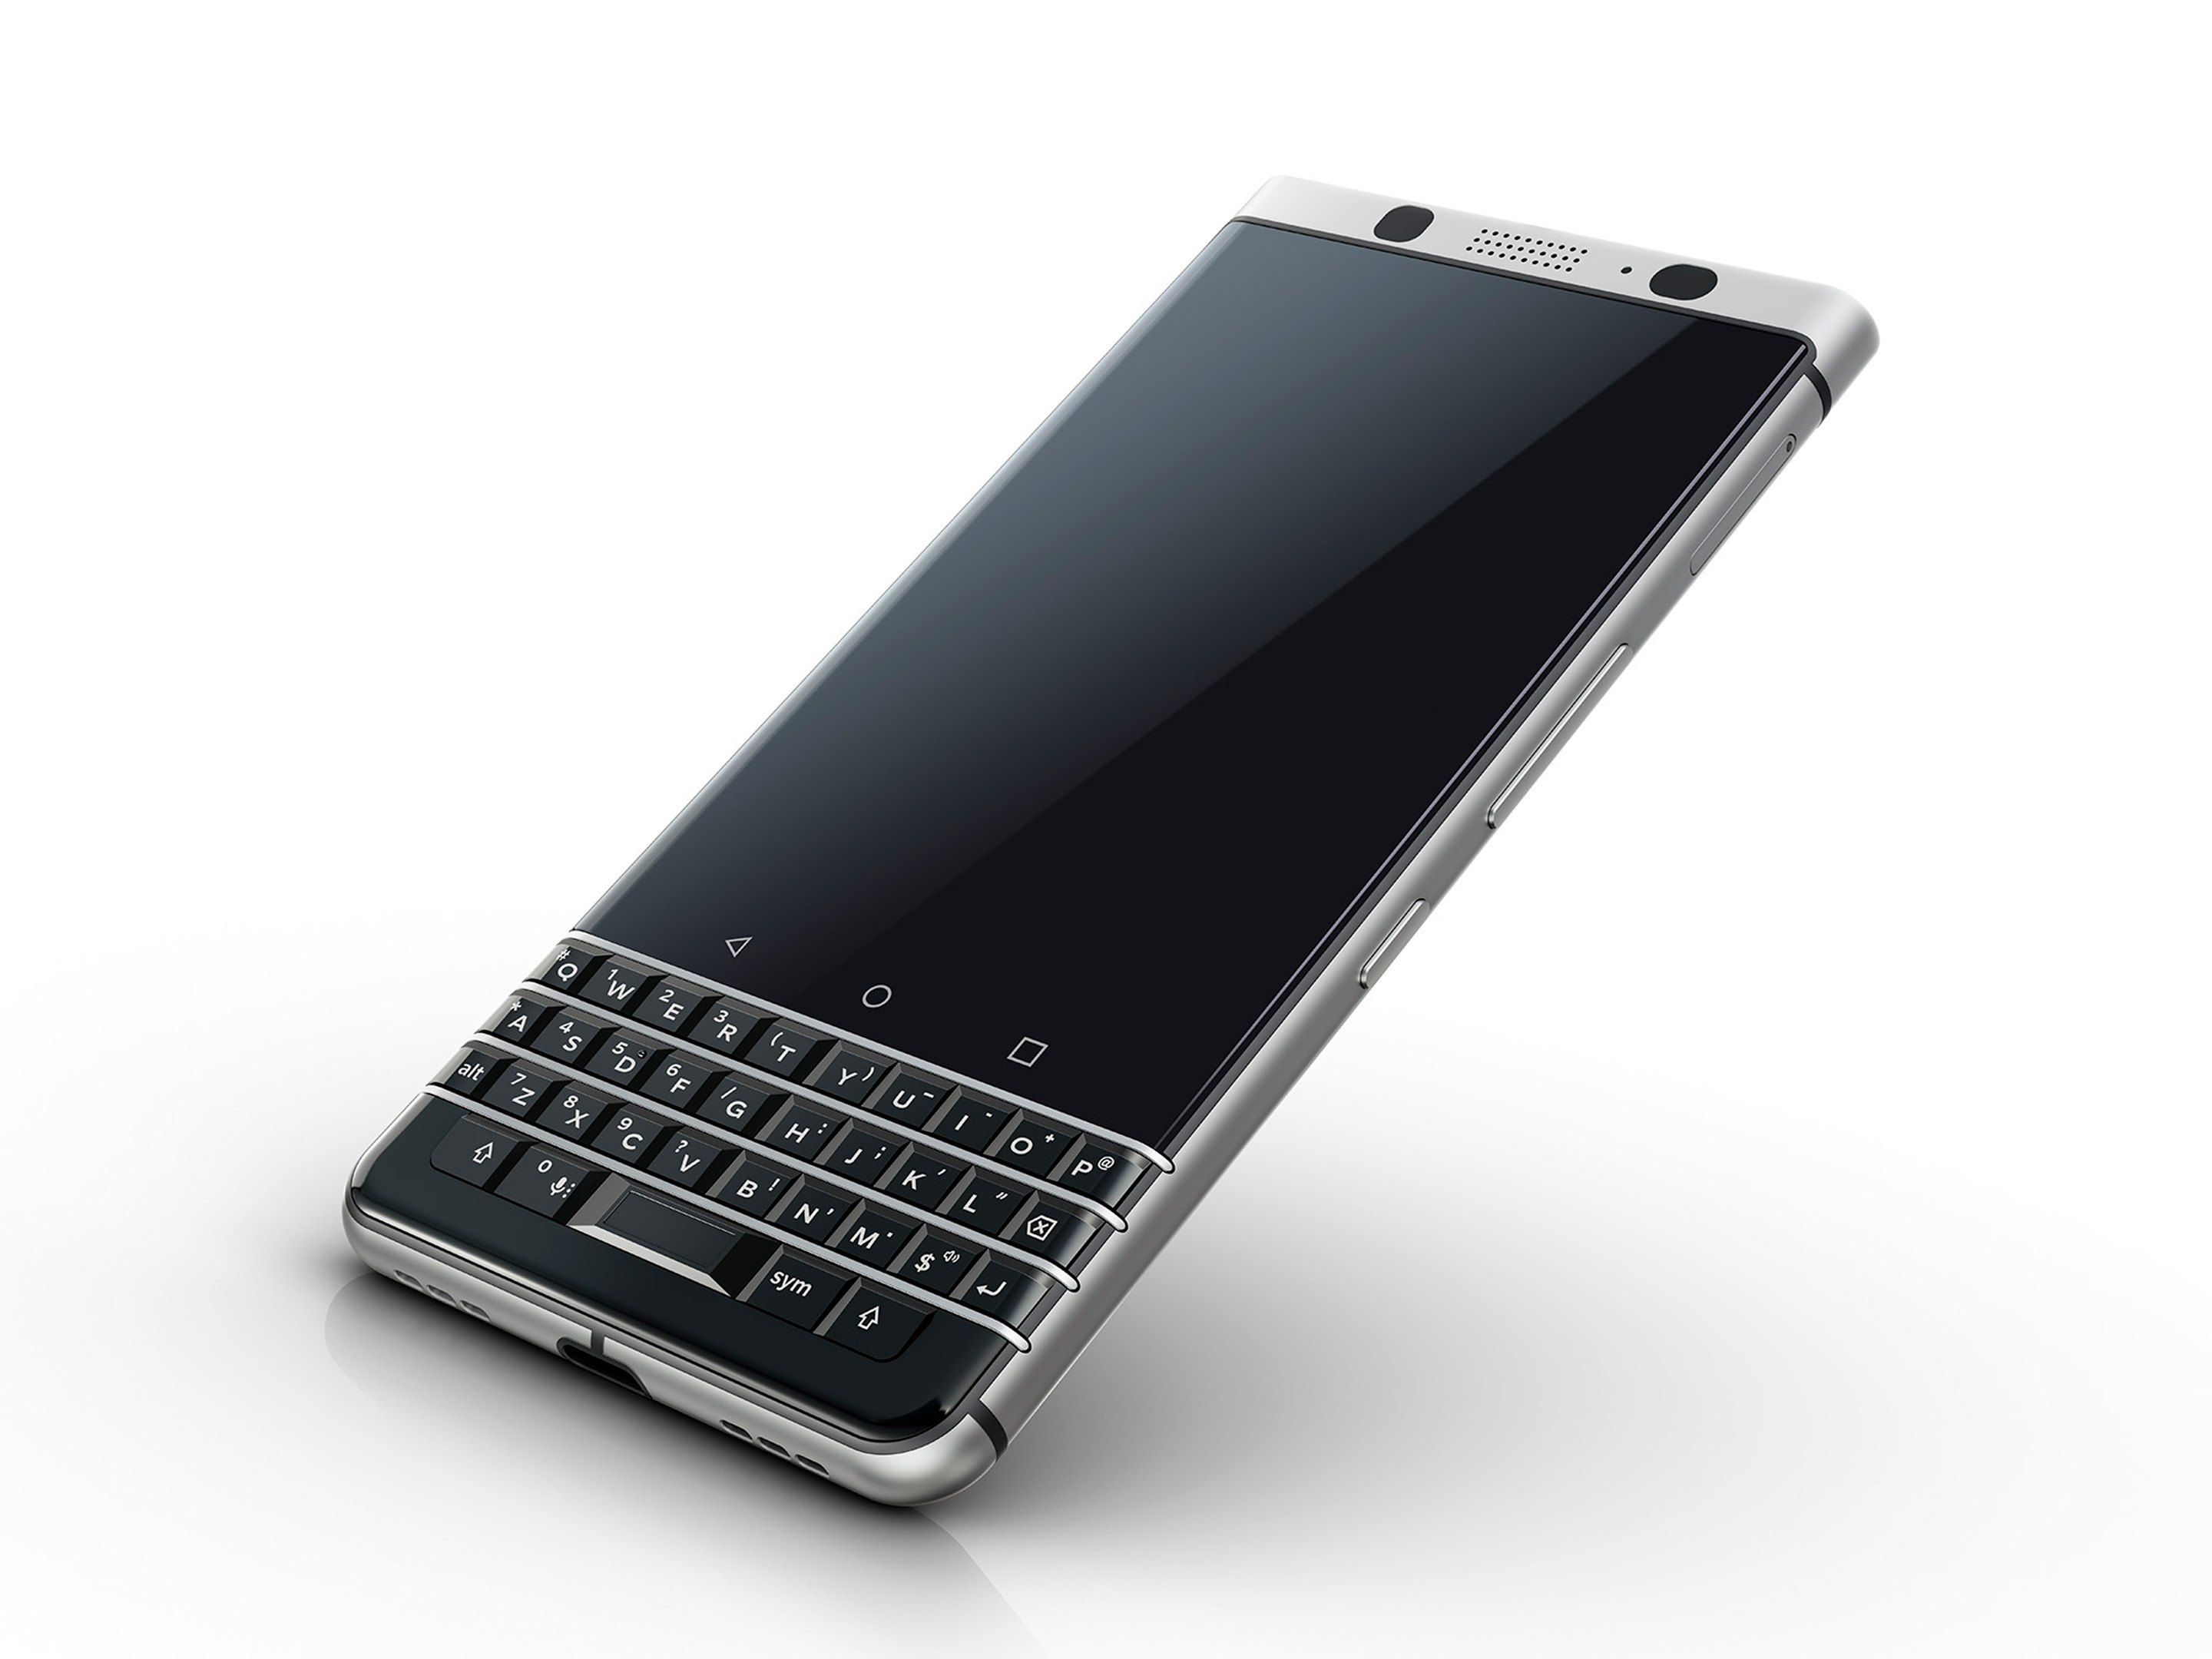 http://cdn.mobilesyrup.com/wp-content/uploads/2017/02/blackberry-keyone-side-render.jpg